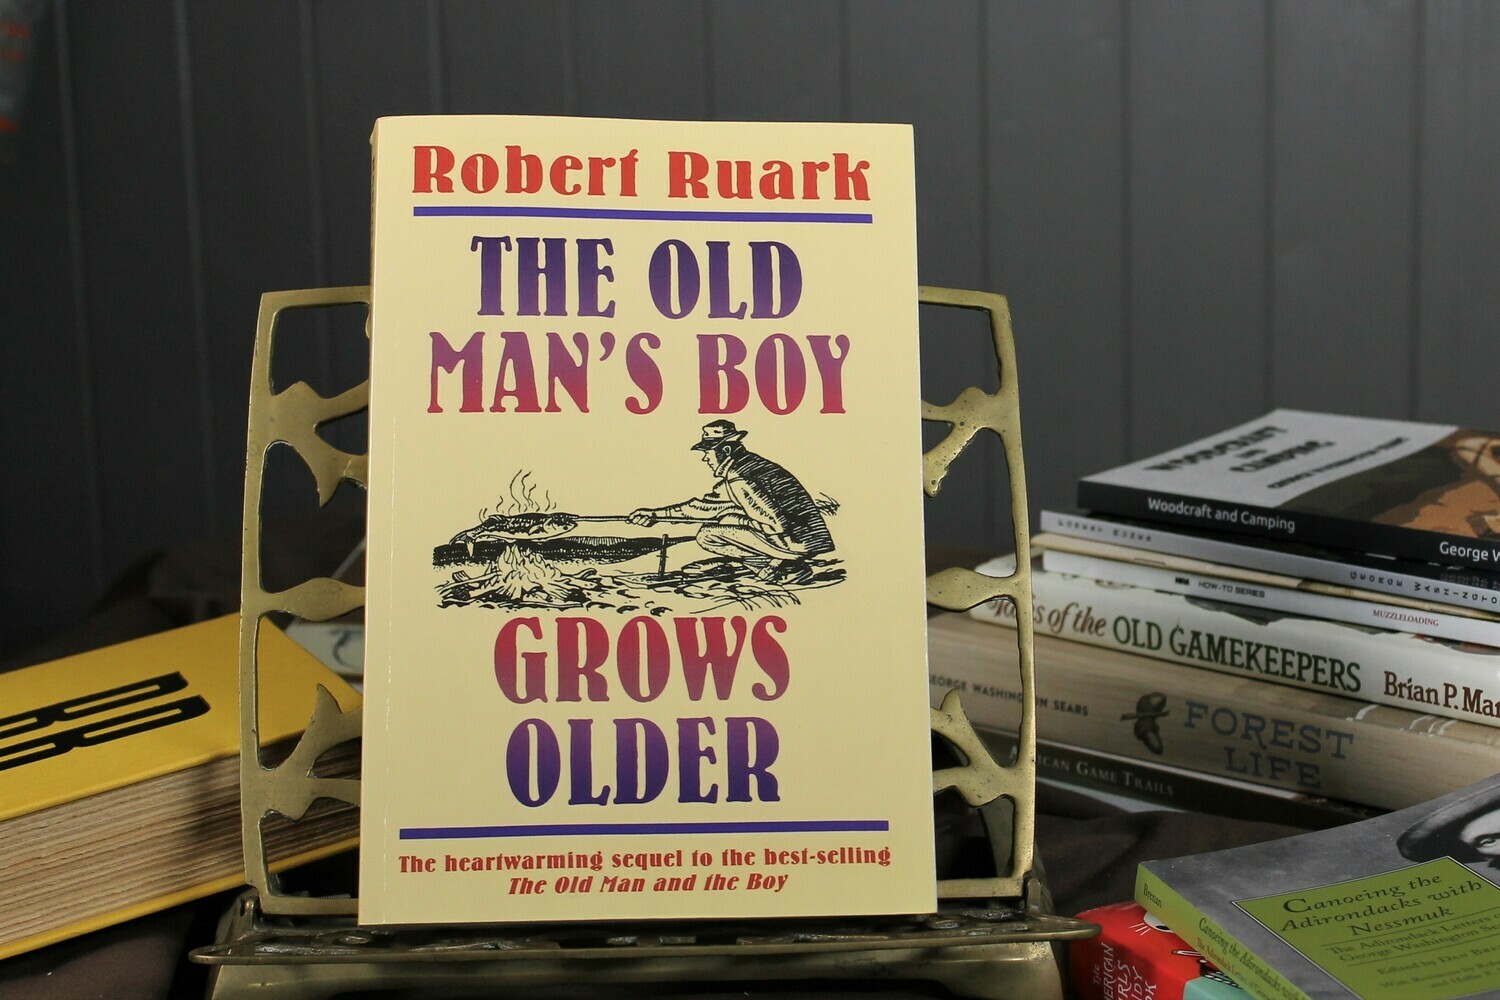 The Old Man's Boy Grows Older by Robert Ruark